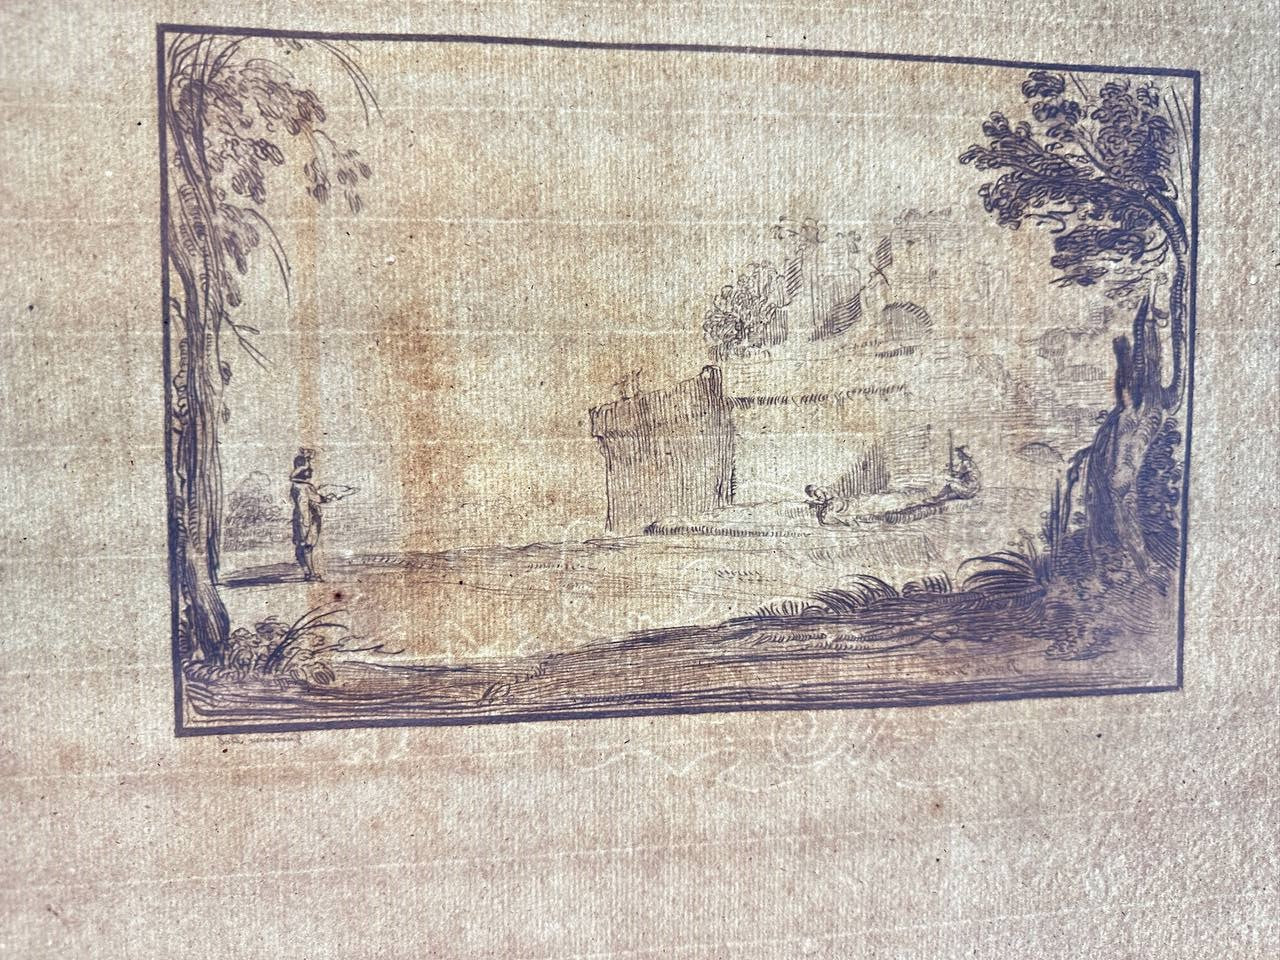 Rare Engraving - Landscape With a Man Drawing Ruins - Bartolozzi - Giovanni